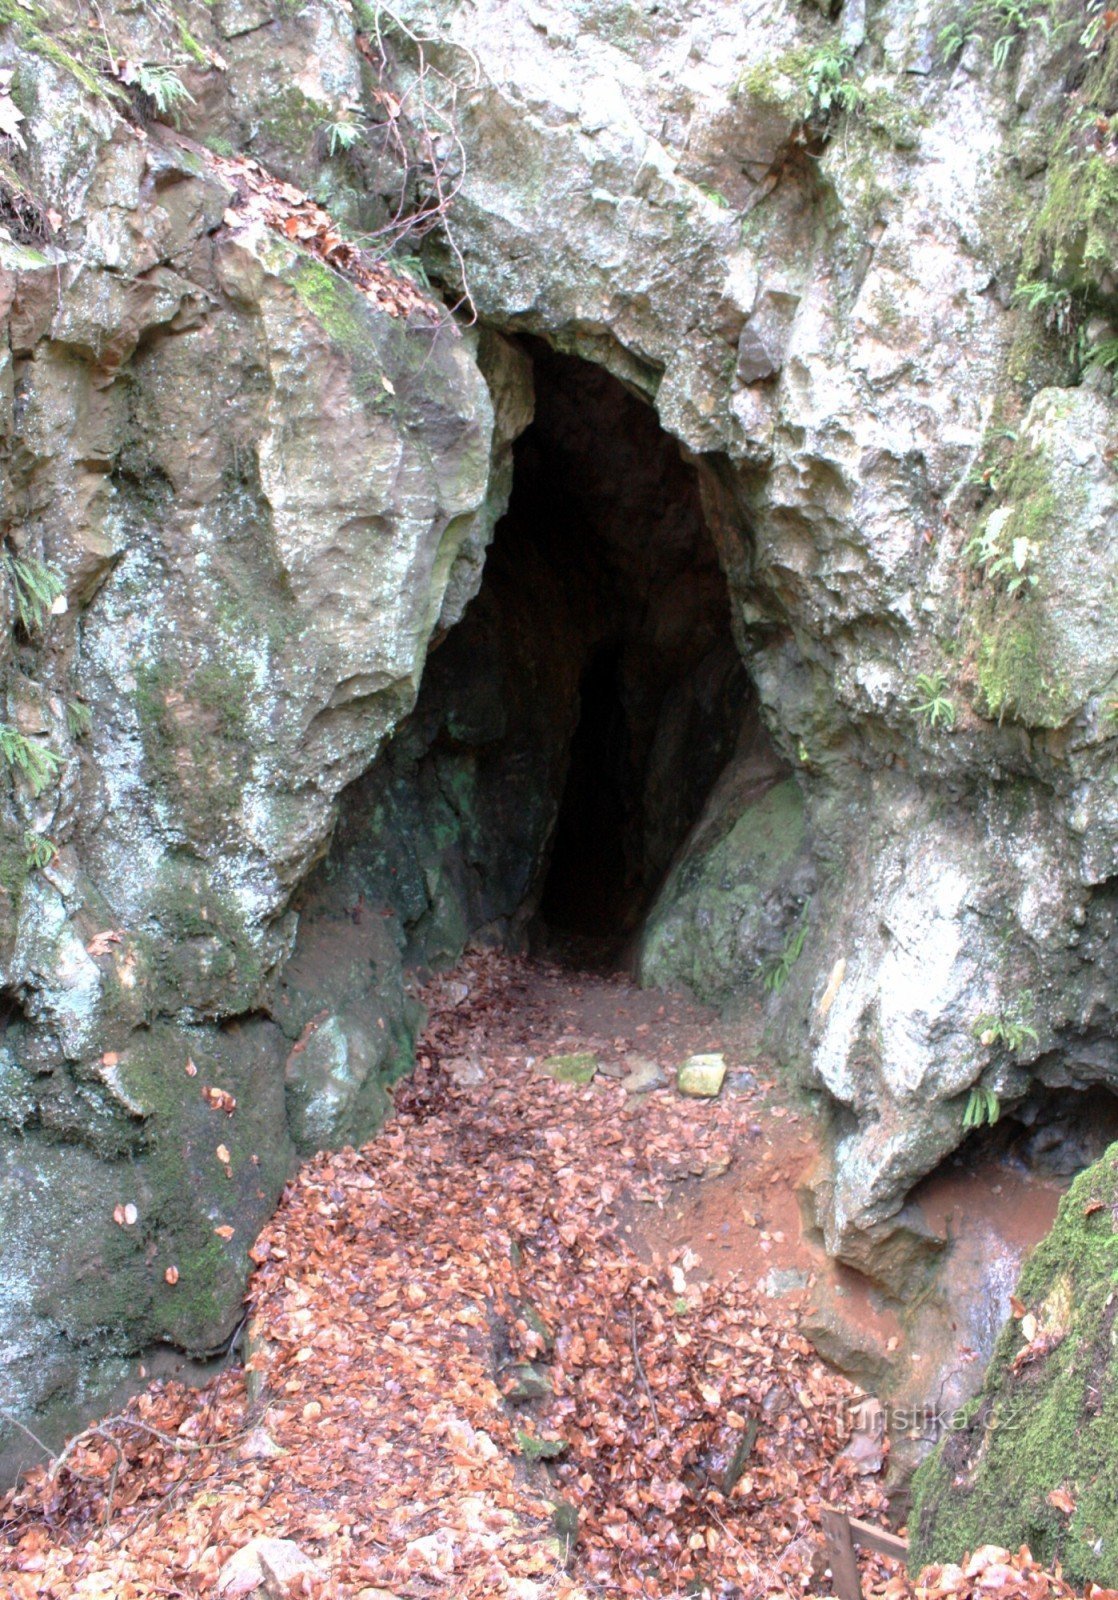 A Sklep barlang bejárata